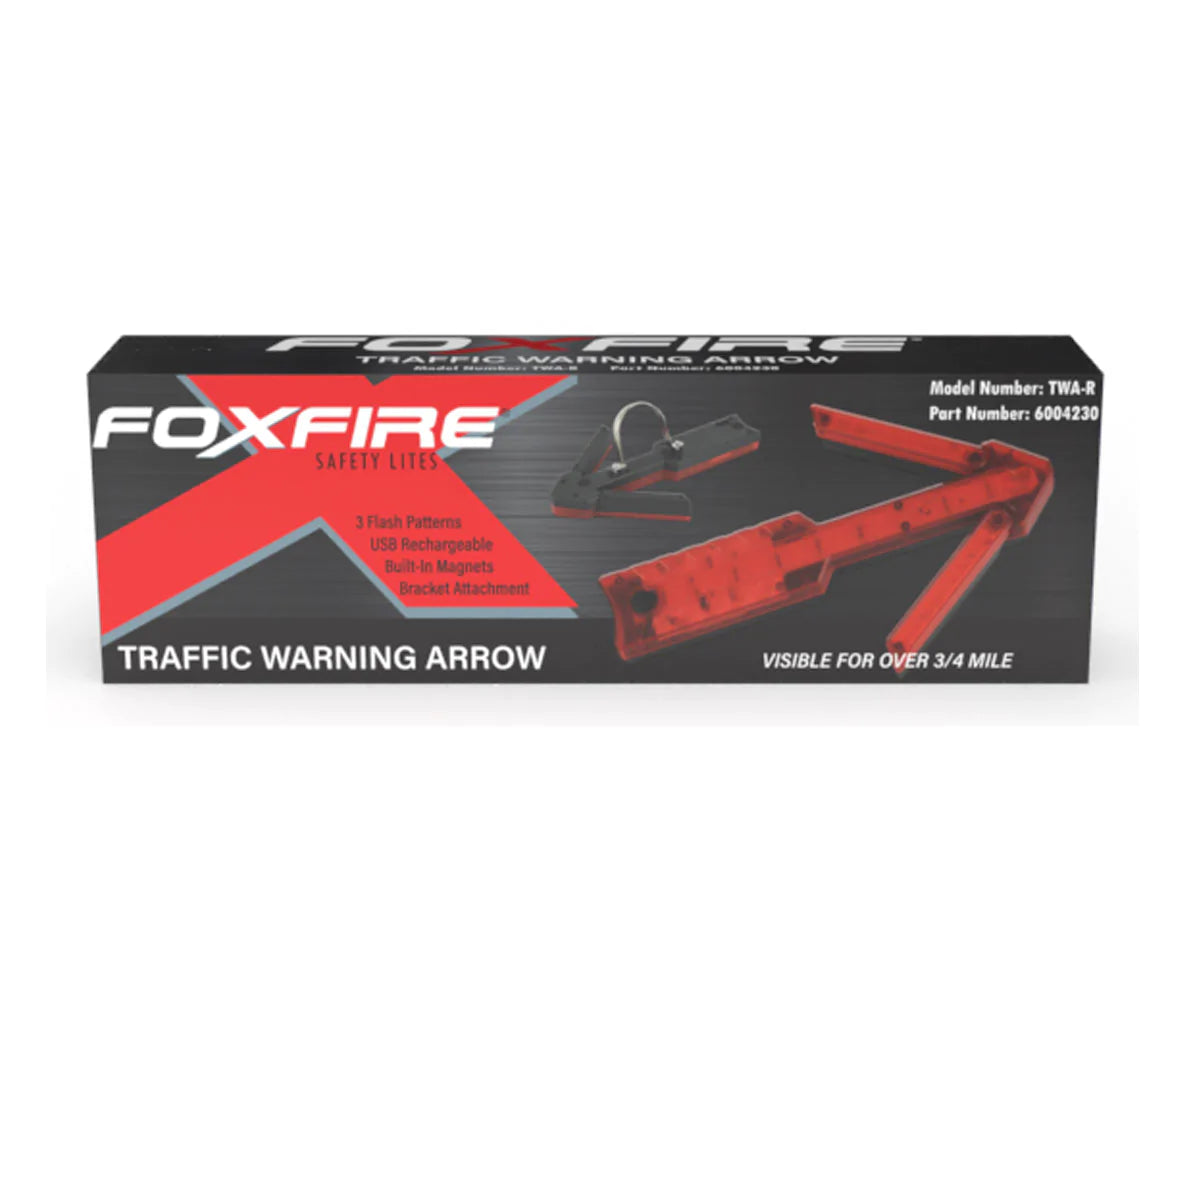 Foxfire LED Traffic Warning Arrow, Red